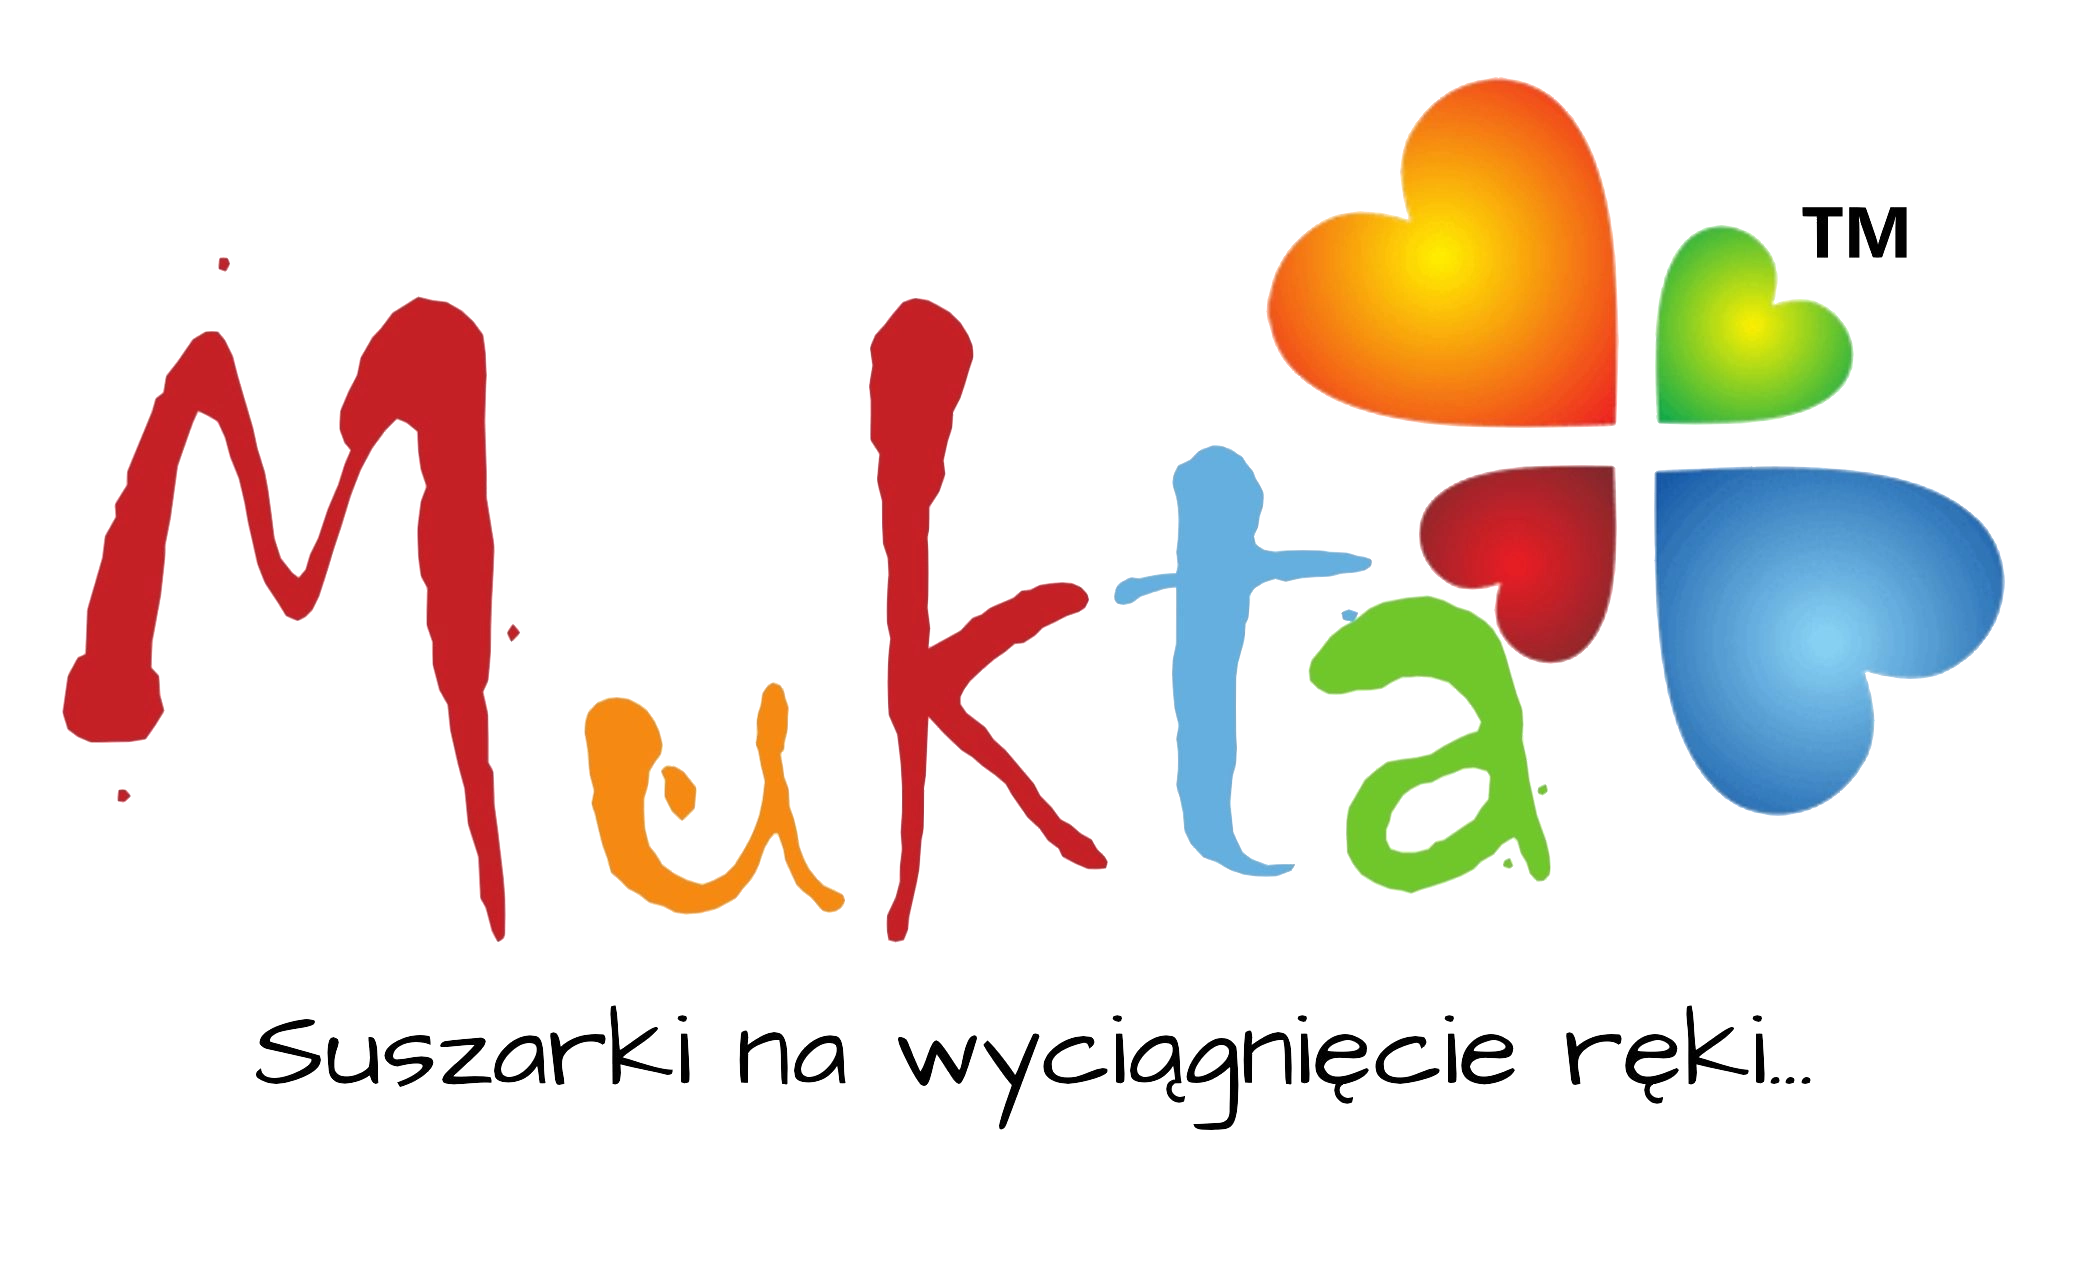  BuyMukta.com 